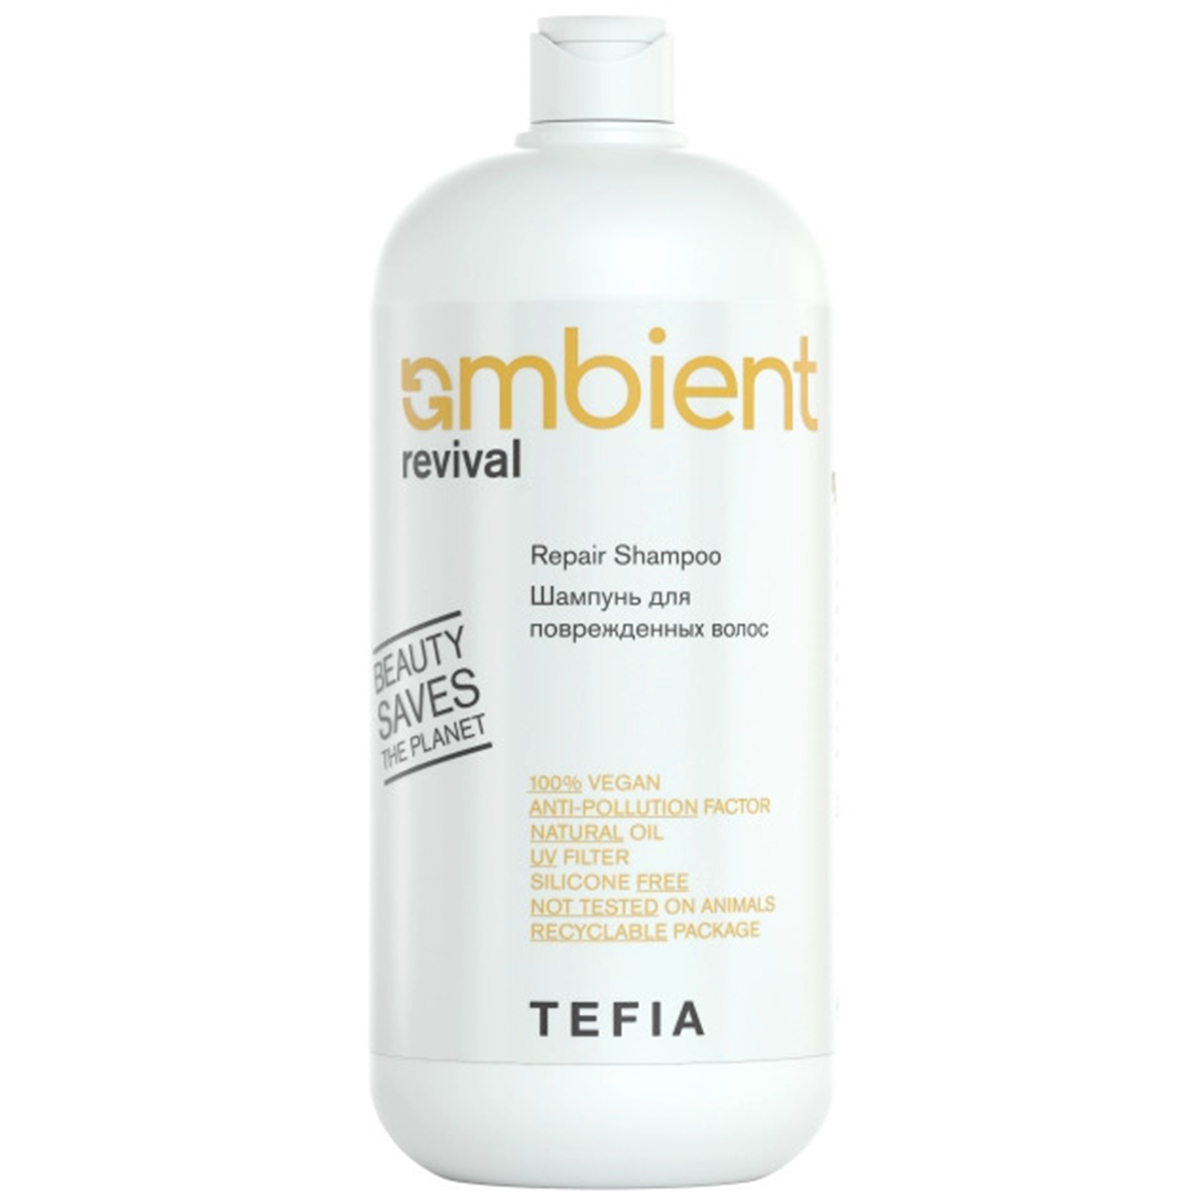 Tefia Шампунь для поврежденных волос, 950 мл (Tefia, Ambient) tefia спрей филлер для поврежденных волос 250 мл tefia ambient